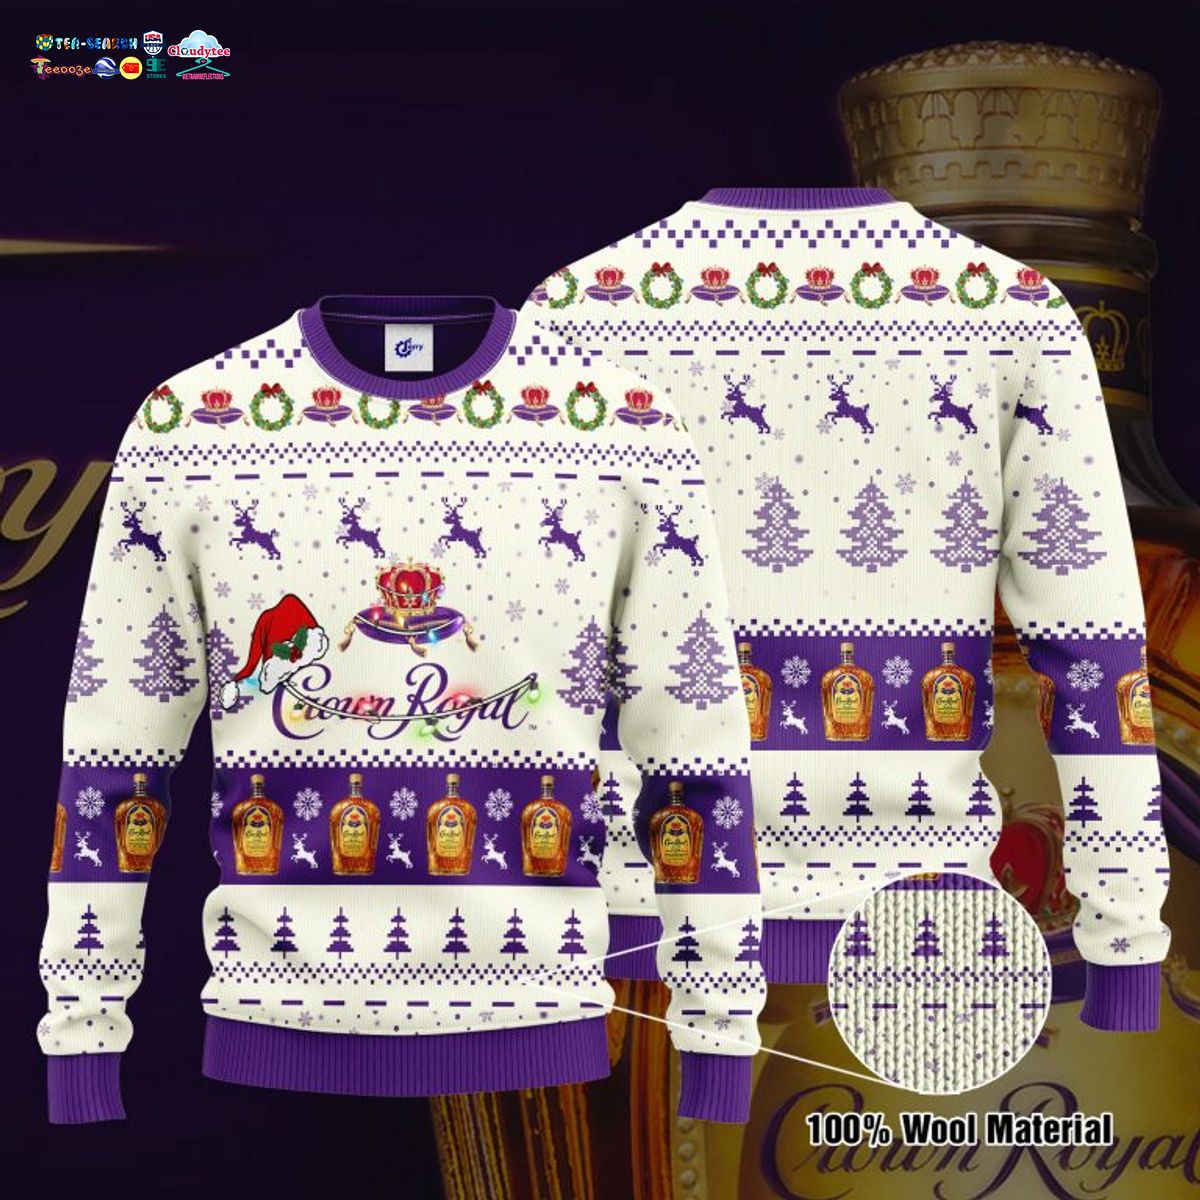 crown-royal-santa-hat-ugly-christmas-sweater-1-qlQgf.jpg